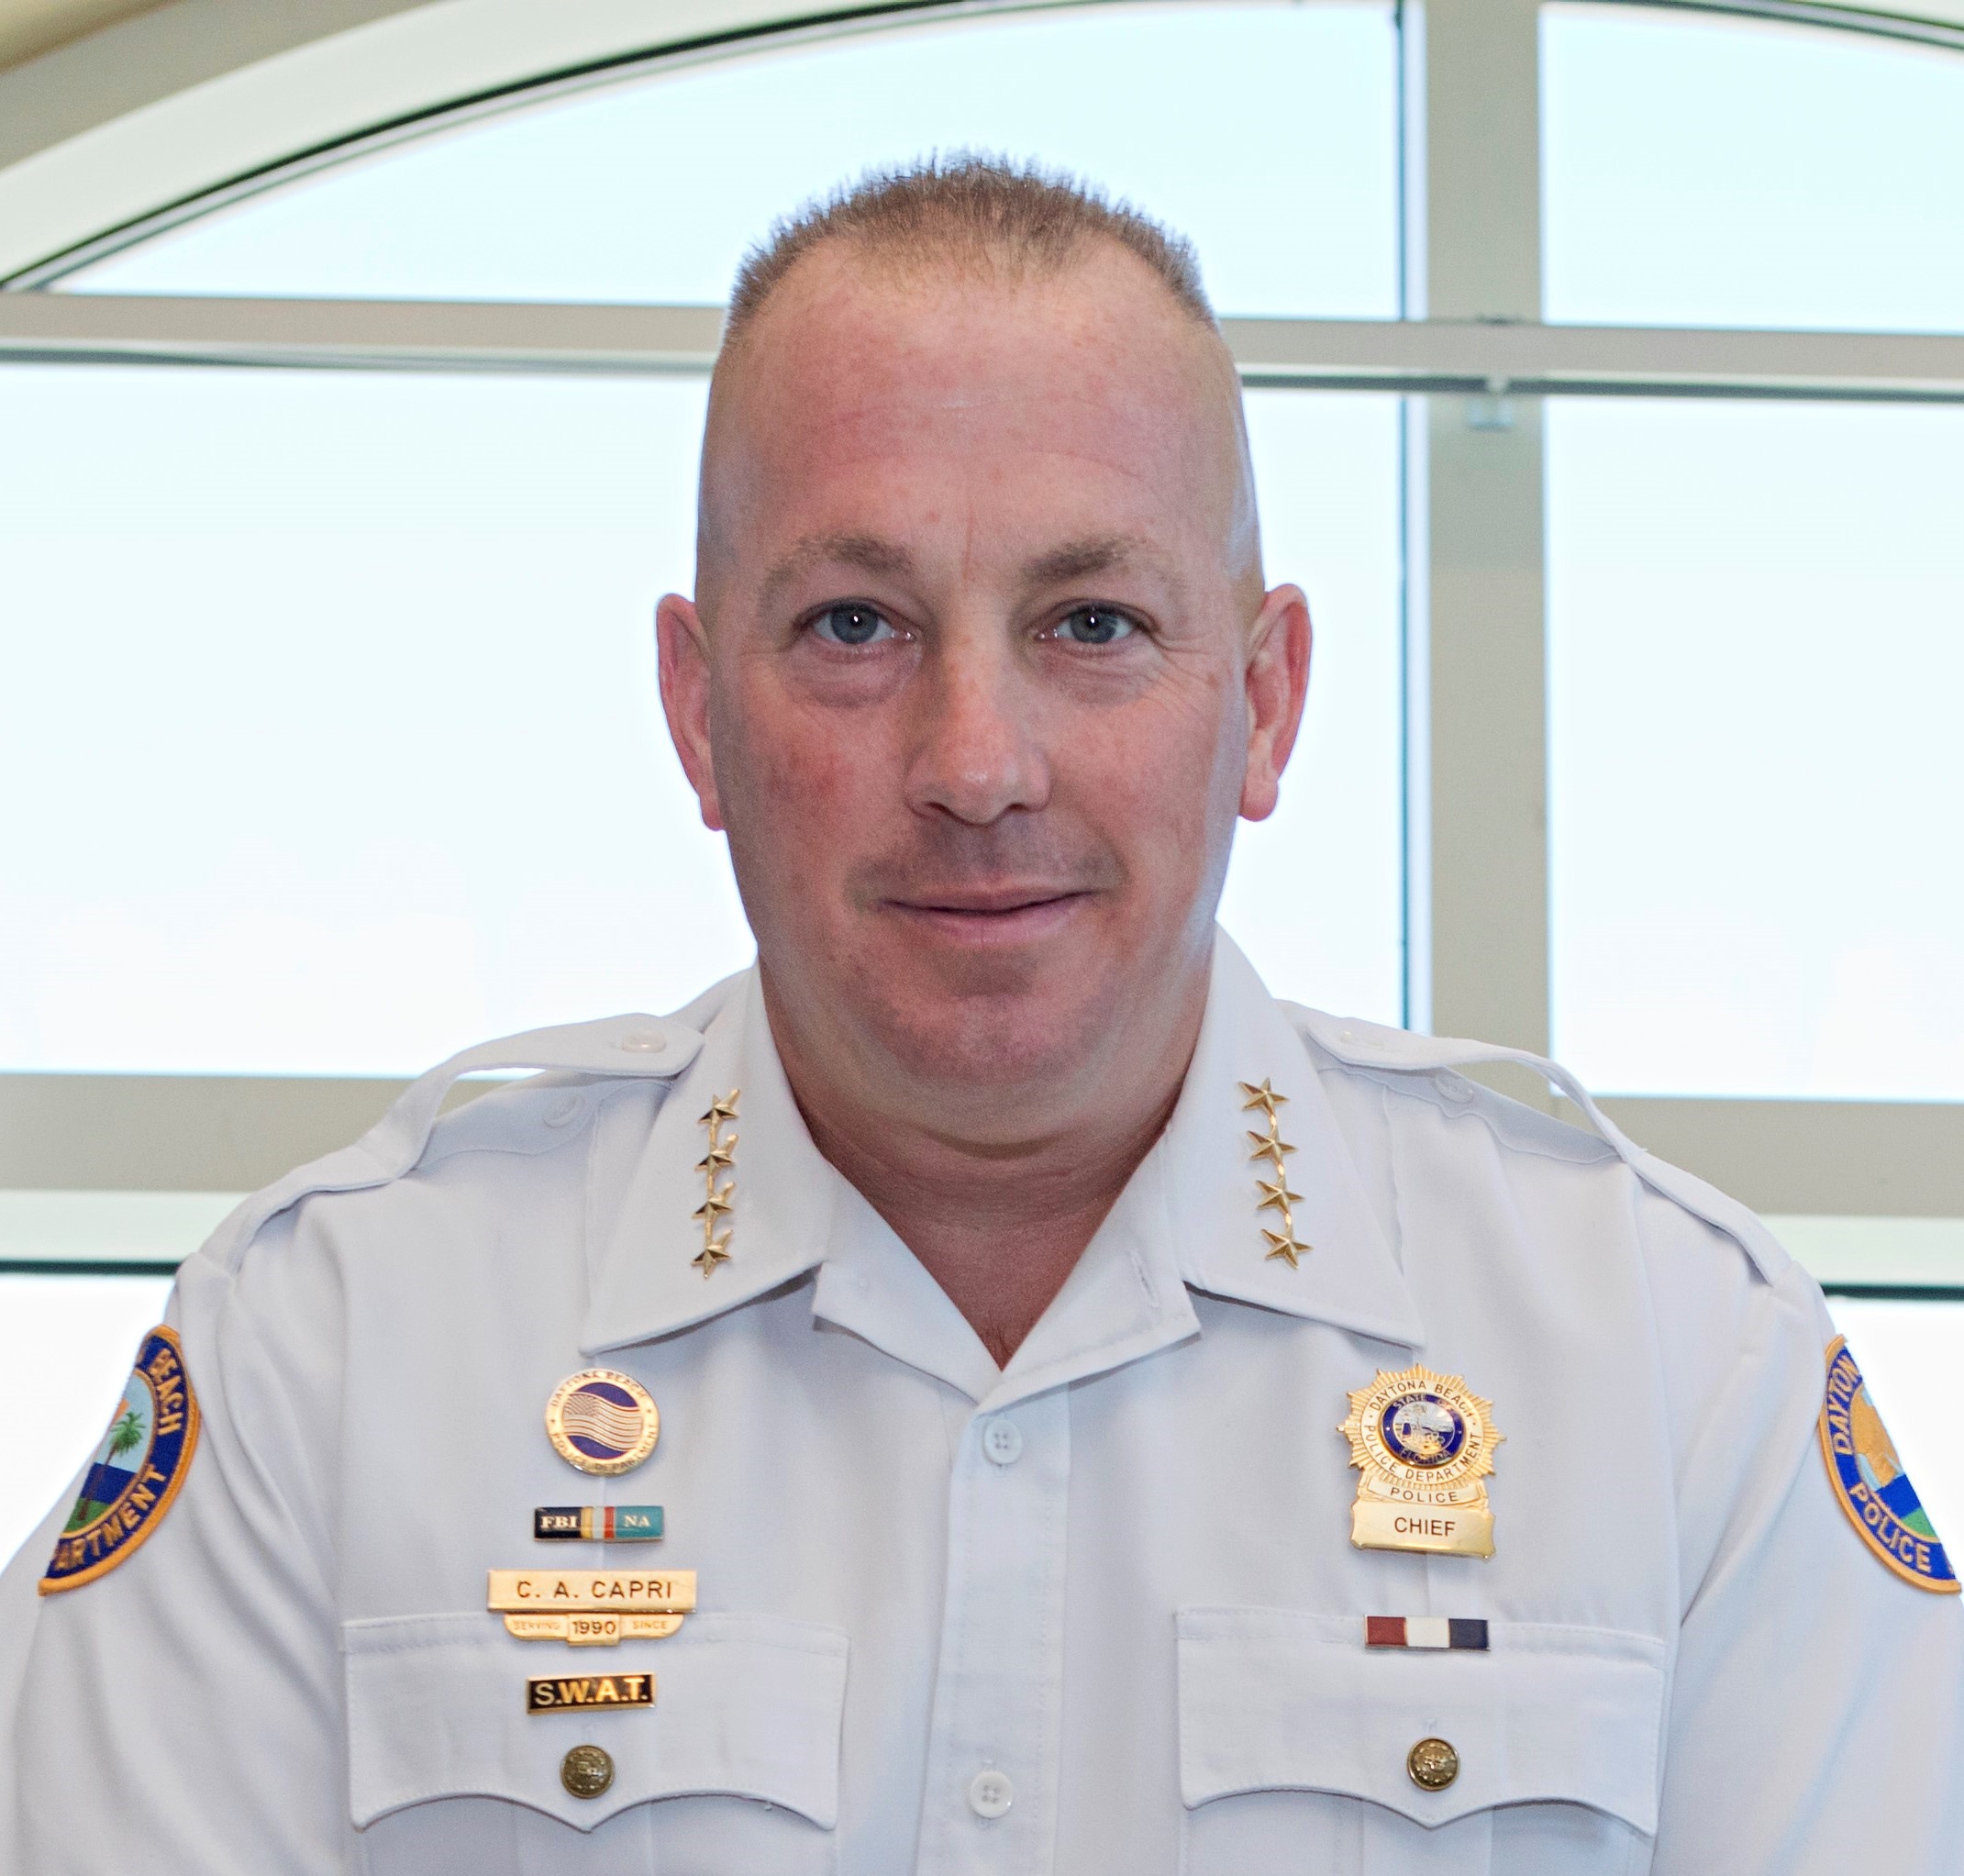 image of Daytona Beach Polic Chief Craig Capri